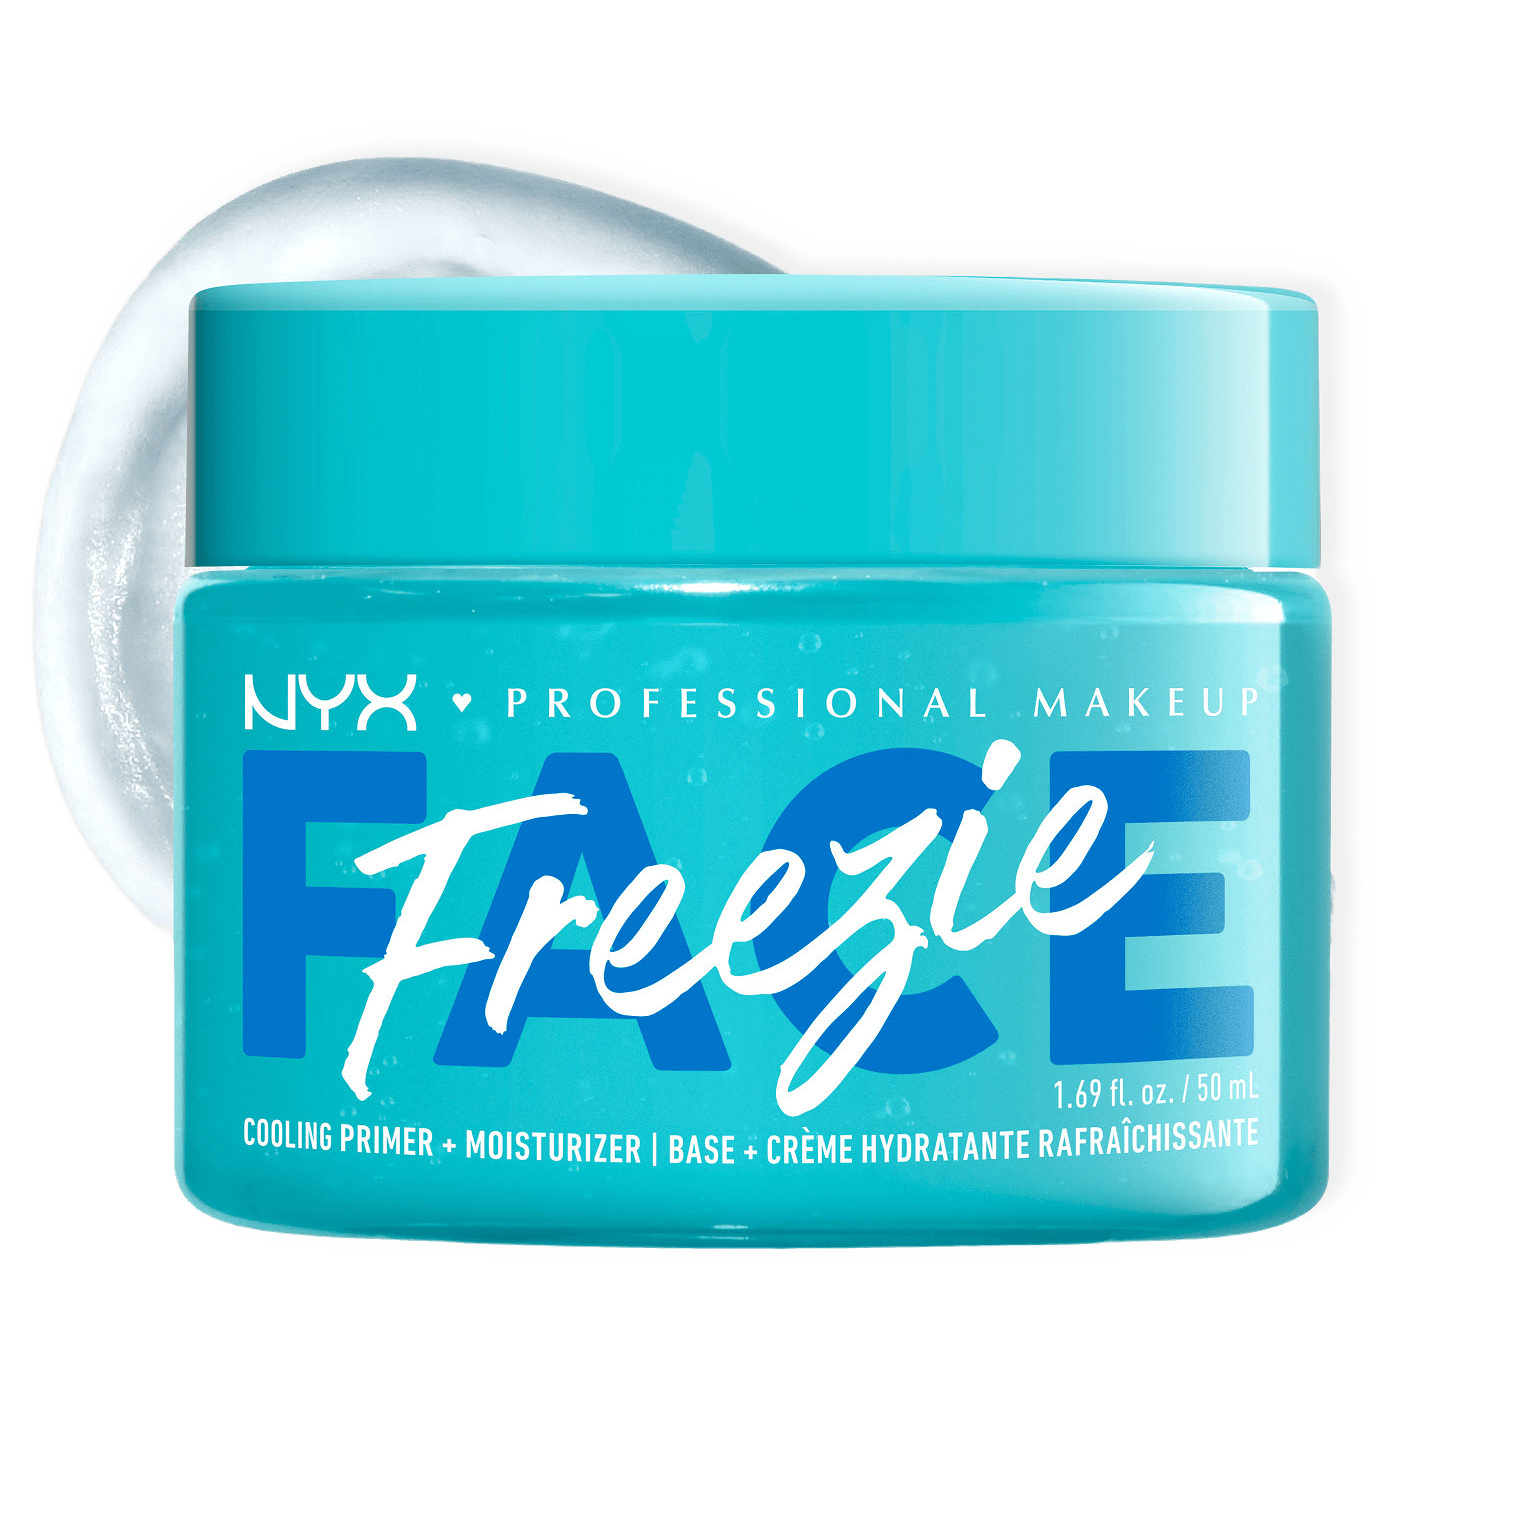 Face Freezie Cooling Primer + Moisturizer från NYX Professional Makeup